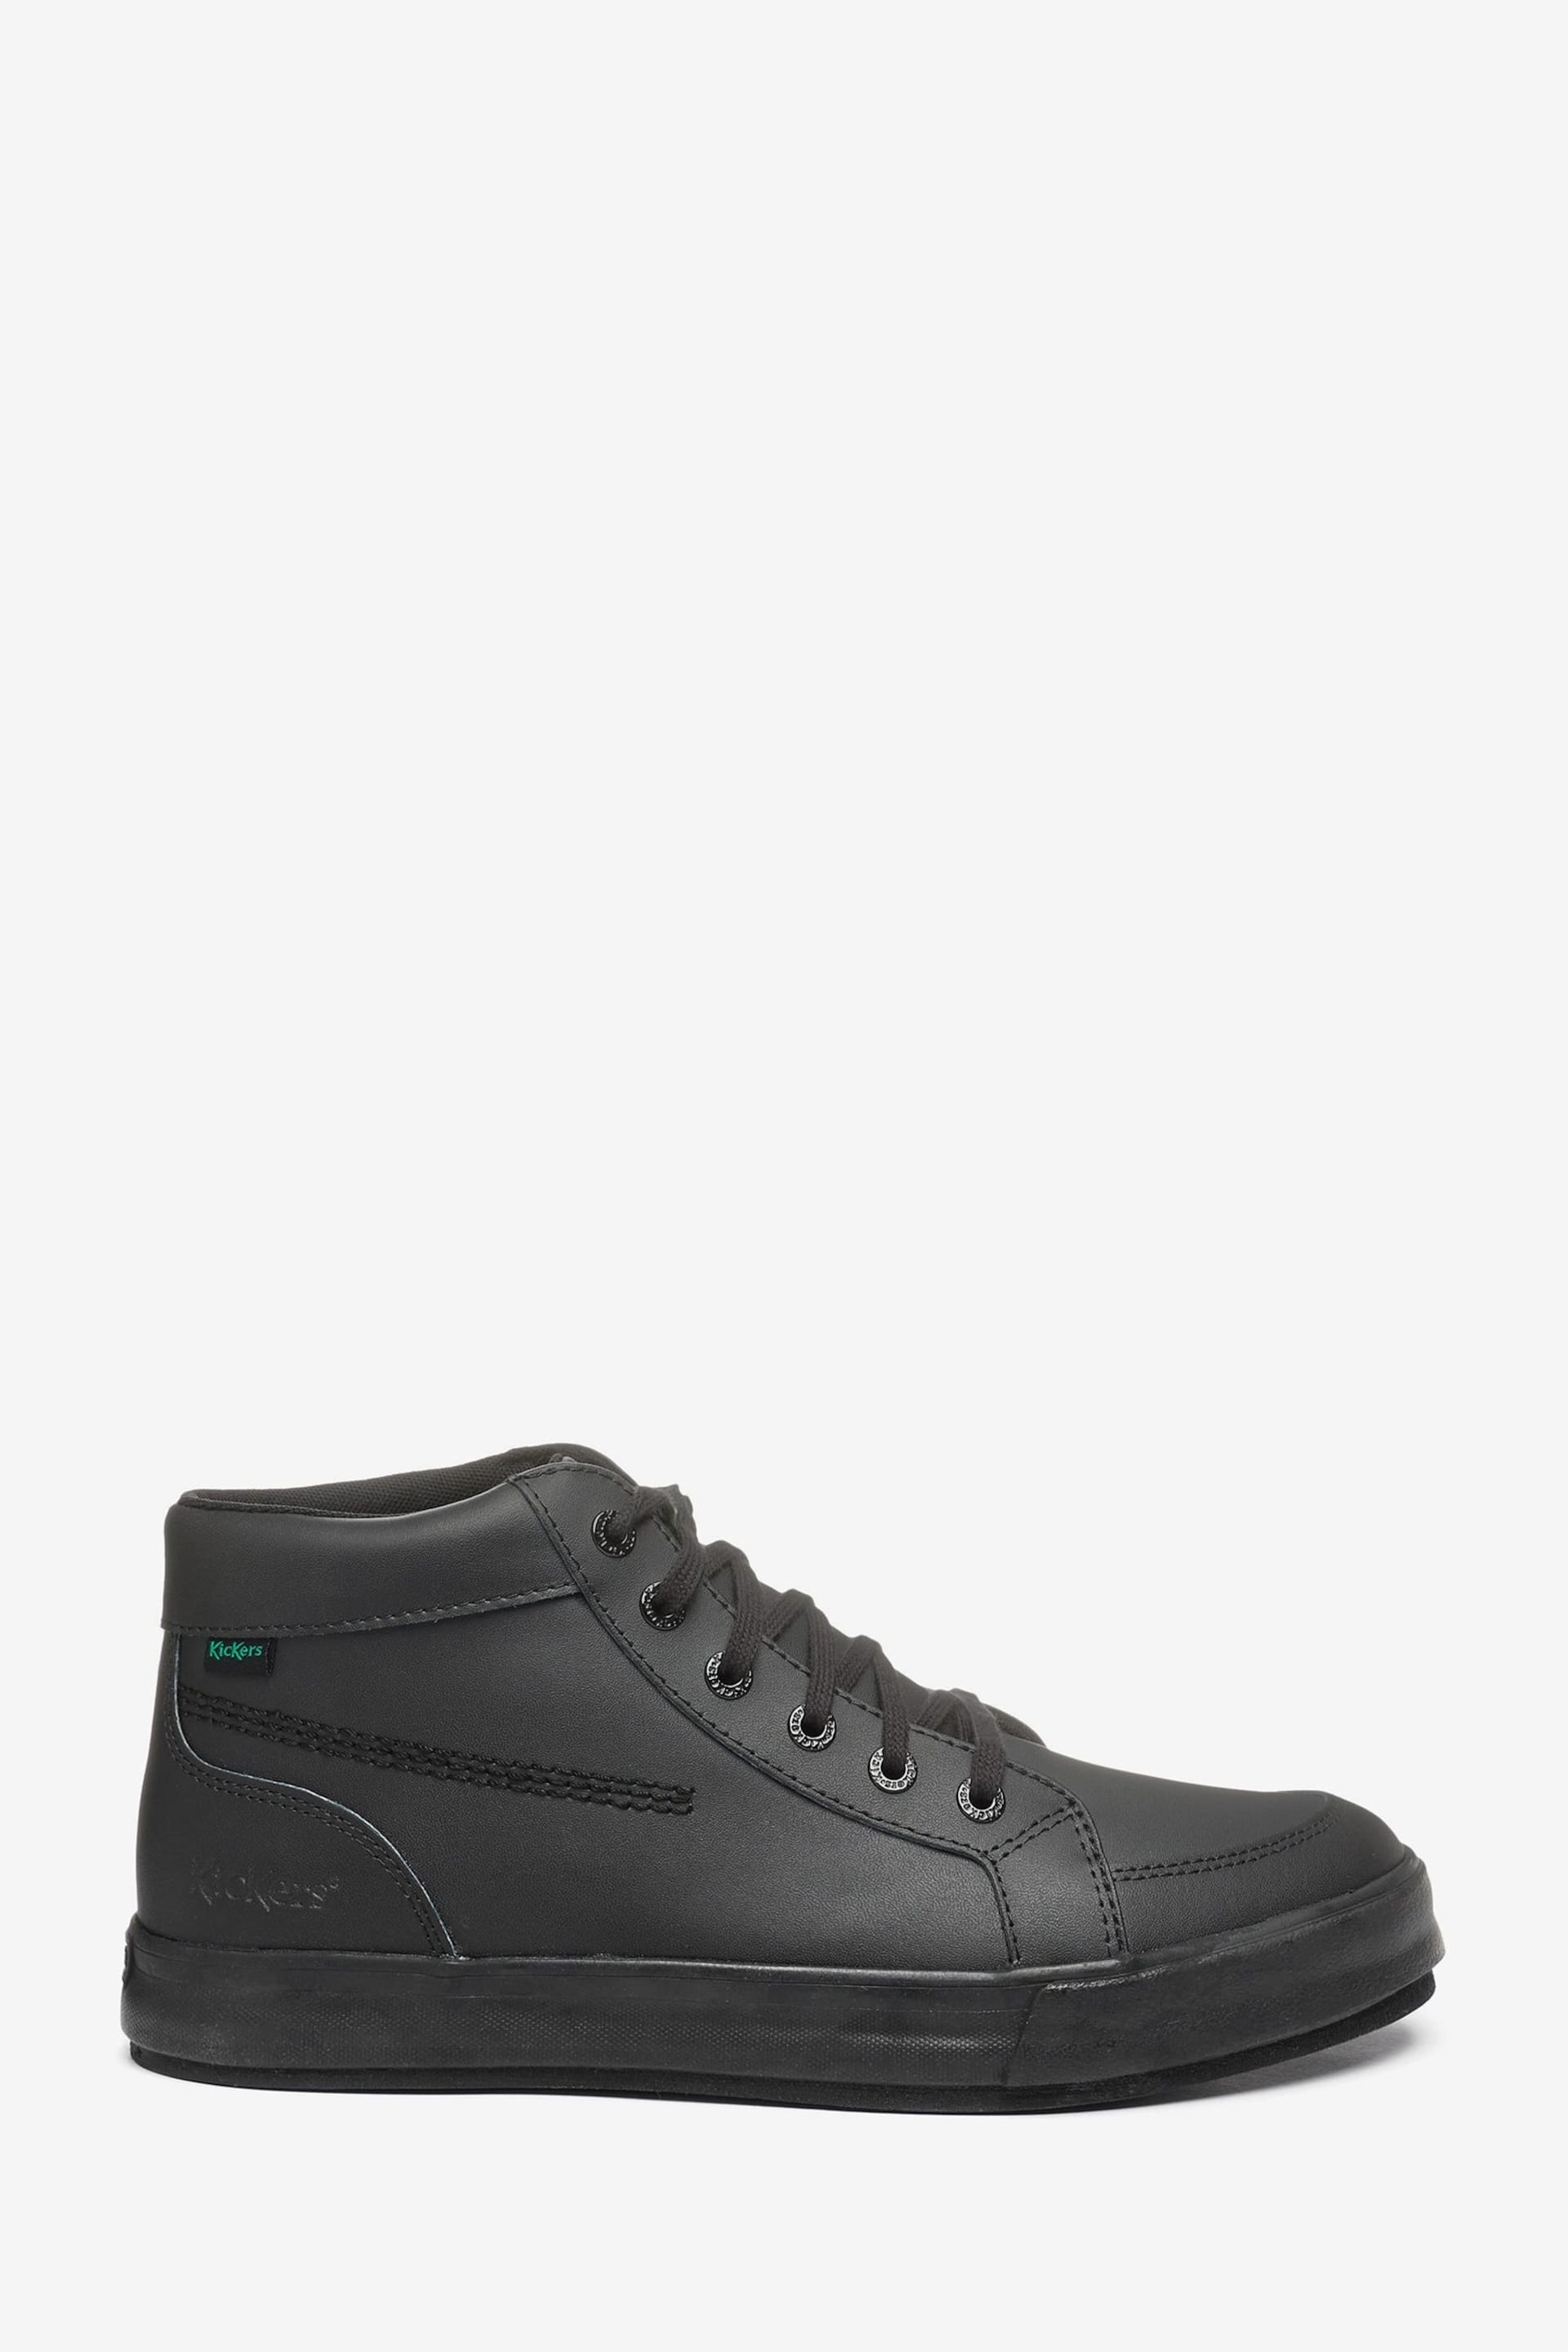 Kickers Black Tovni Hi Leather Shoes - Image 1 of 6